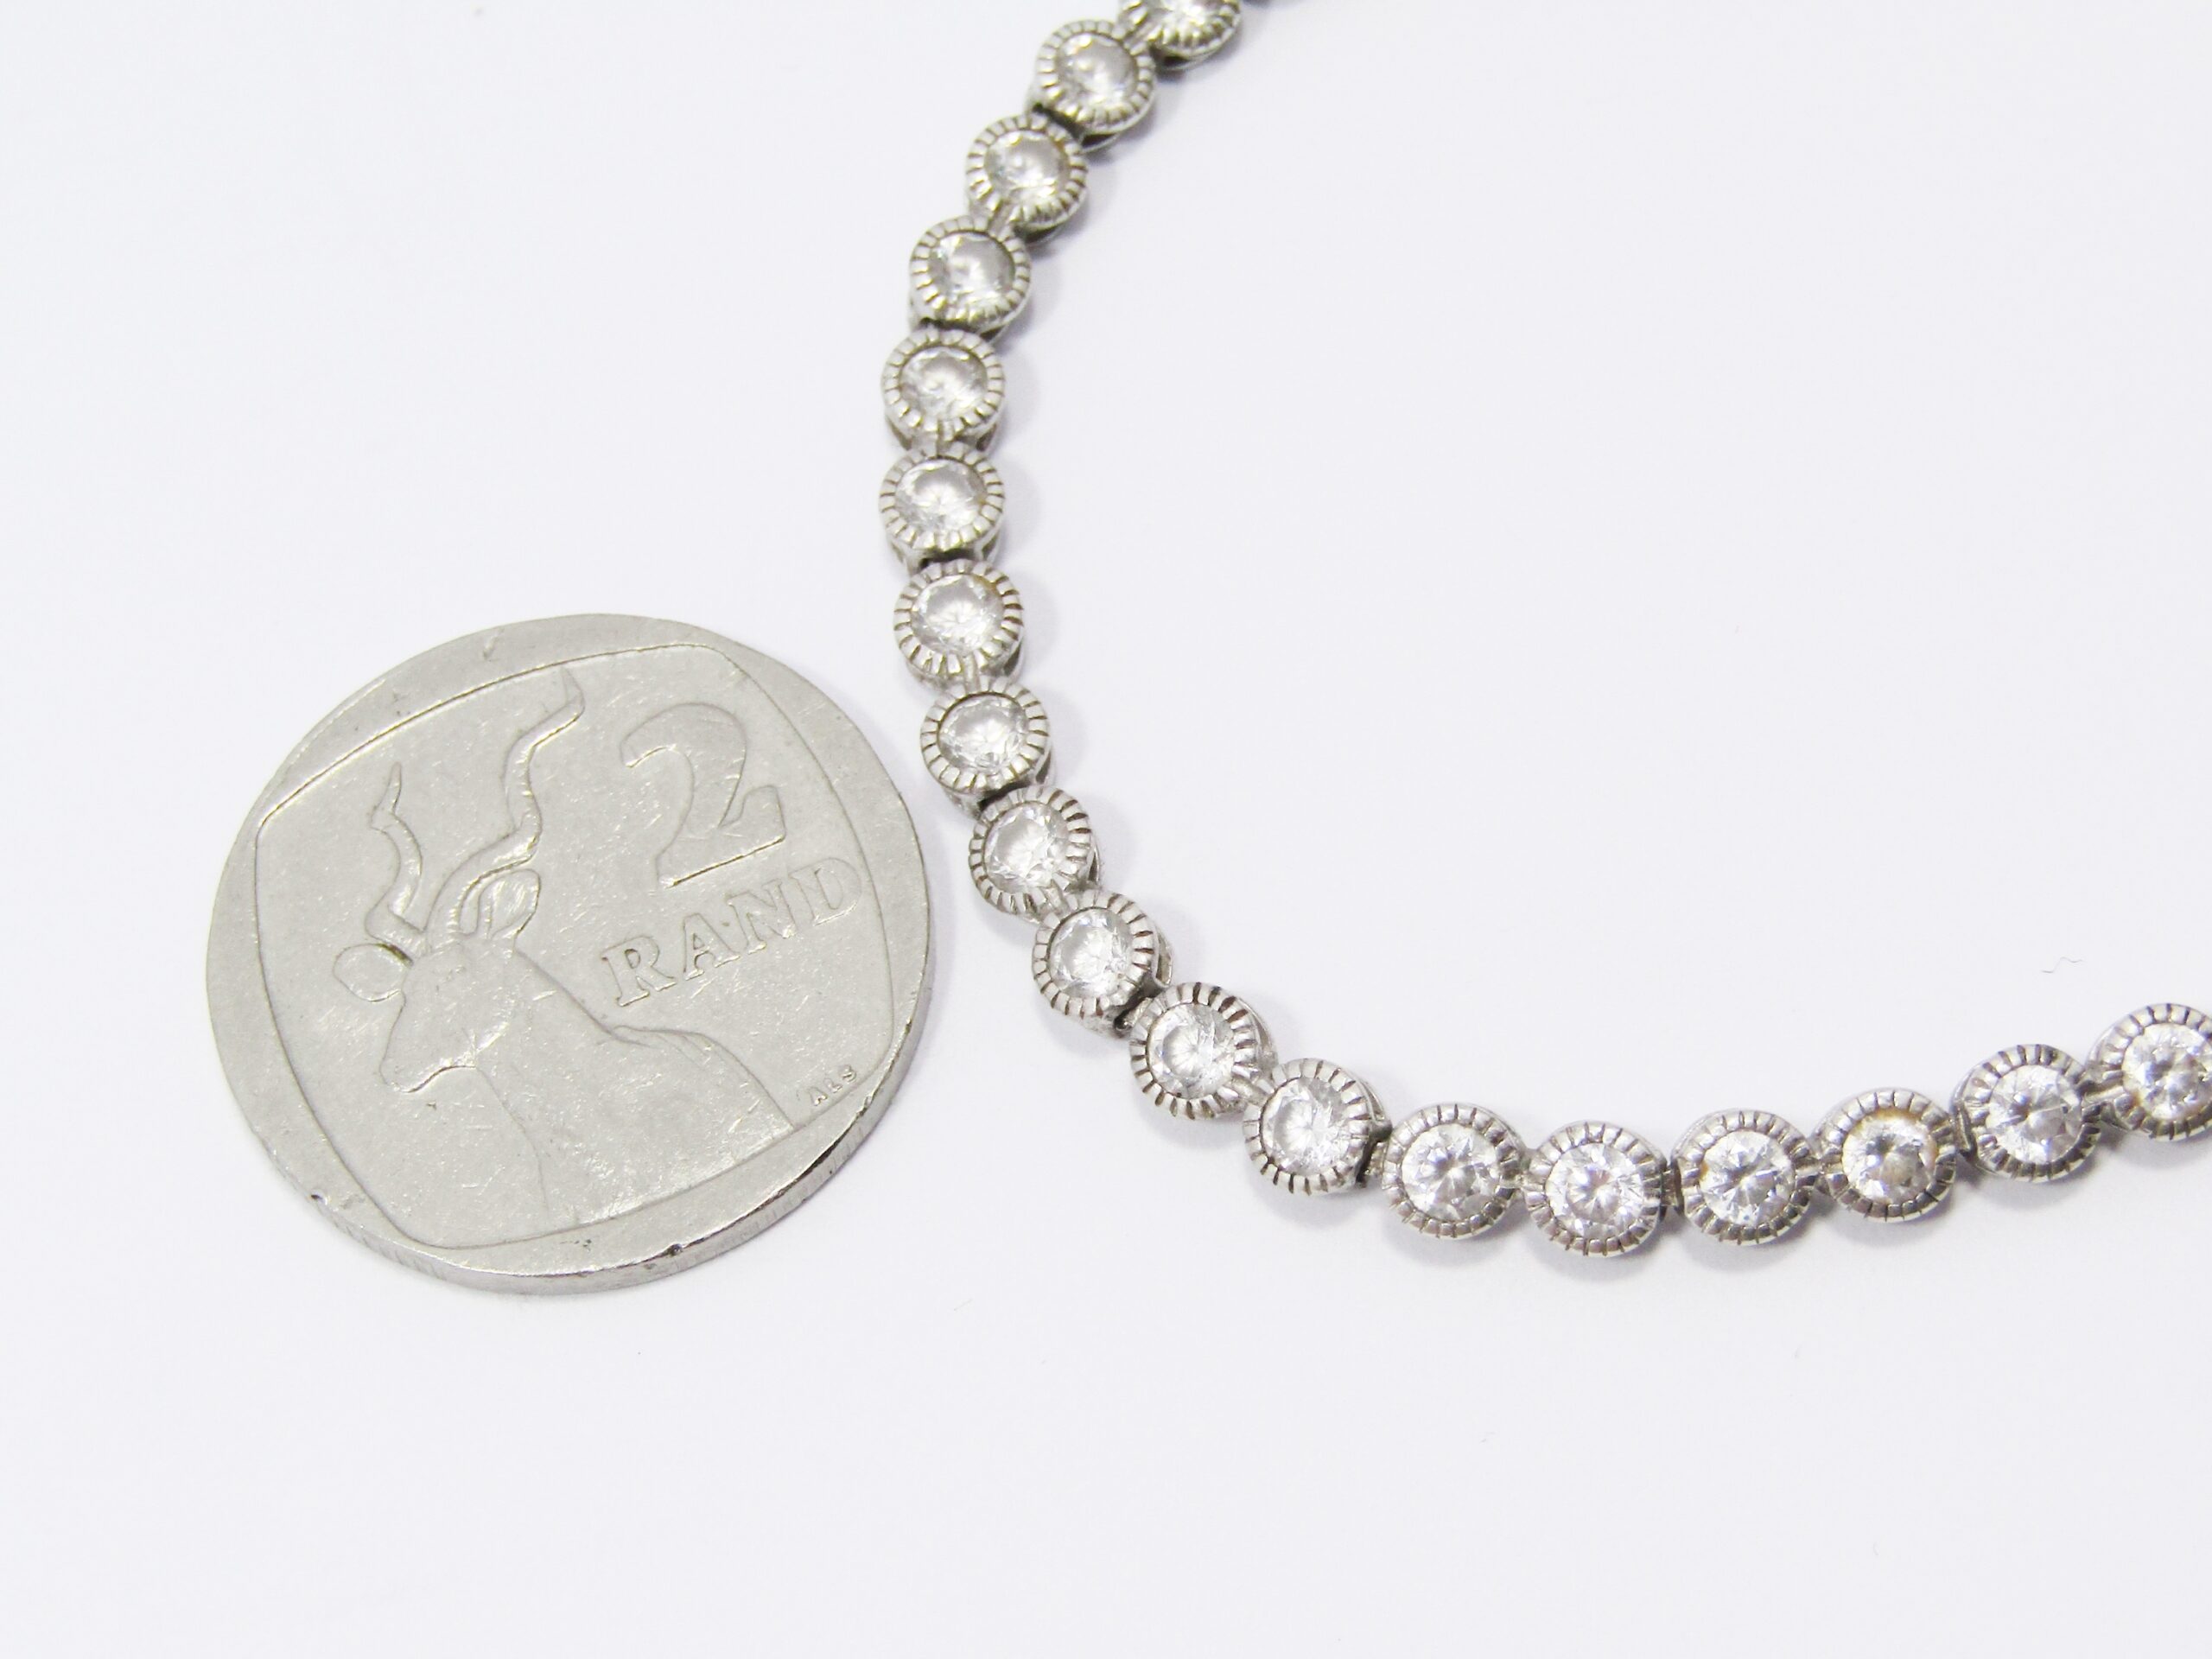 A Stunning Clear Zirconia Tennis Bracelet in Sterling Silver